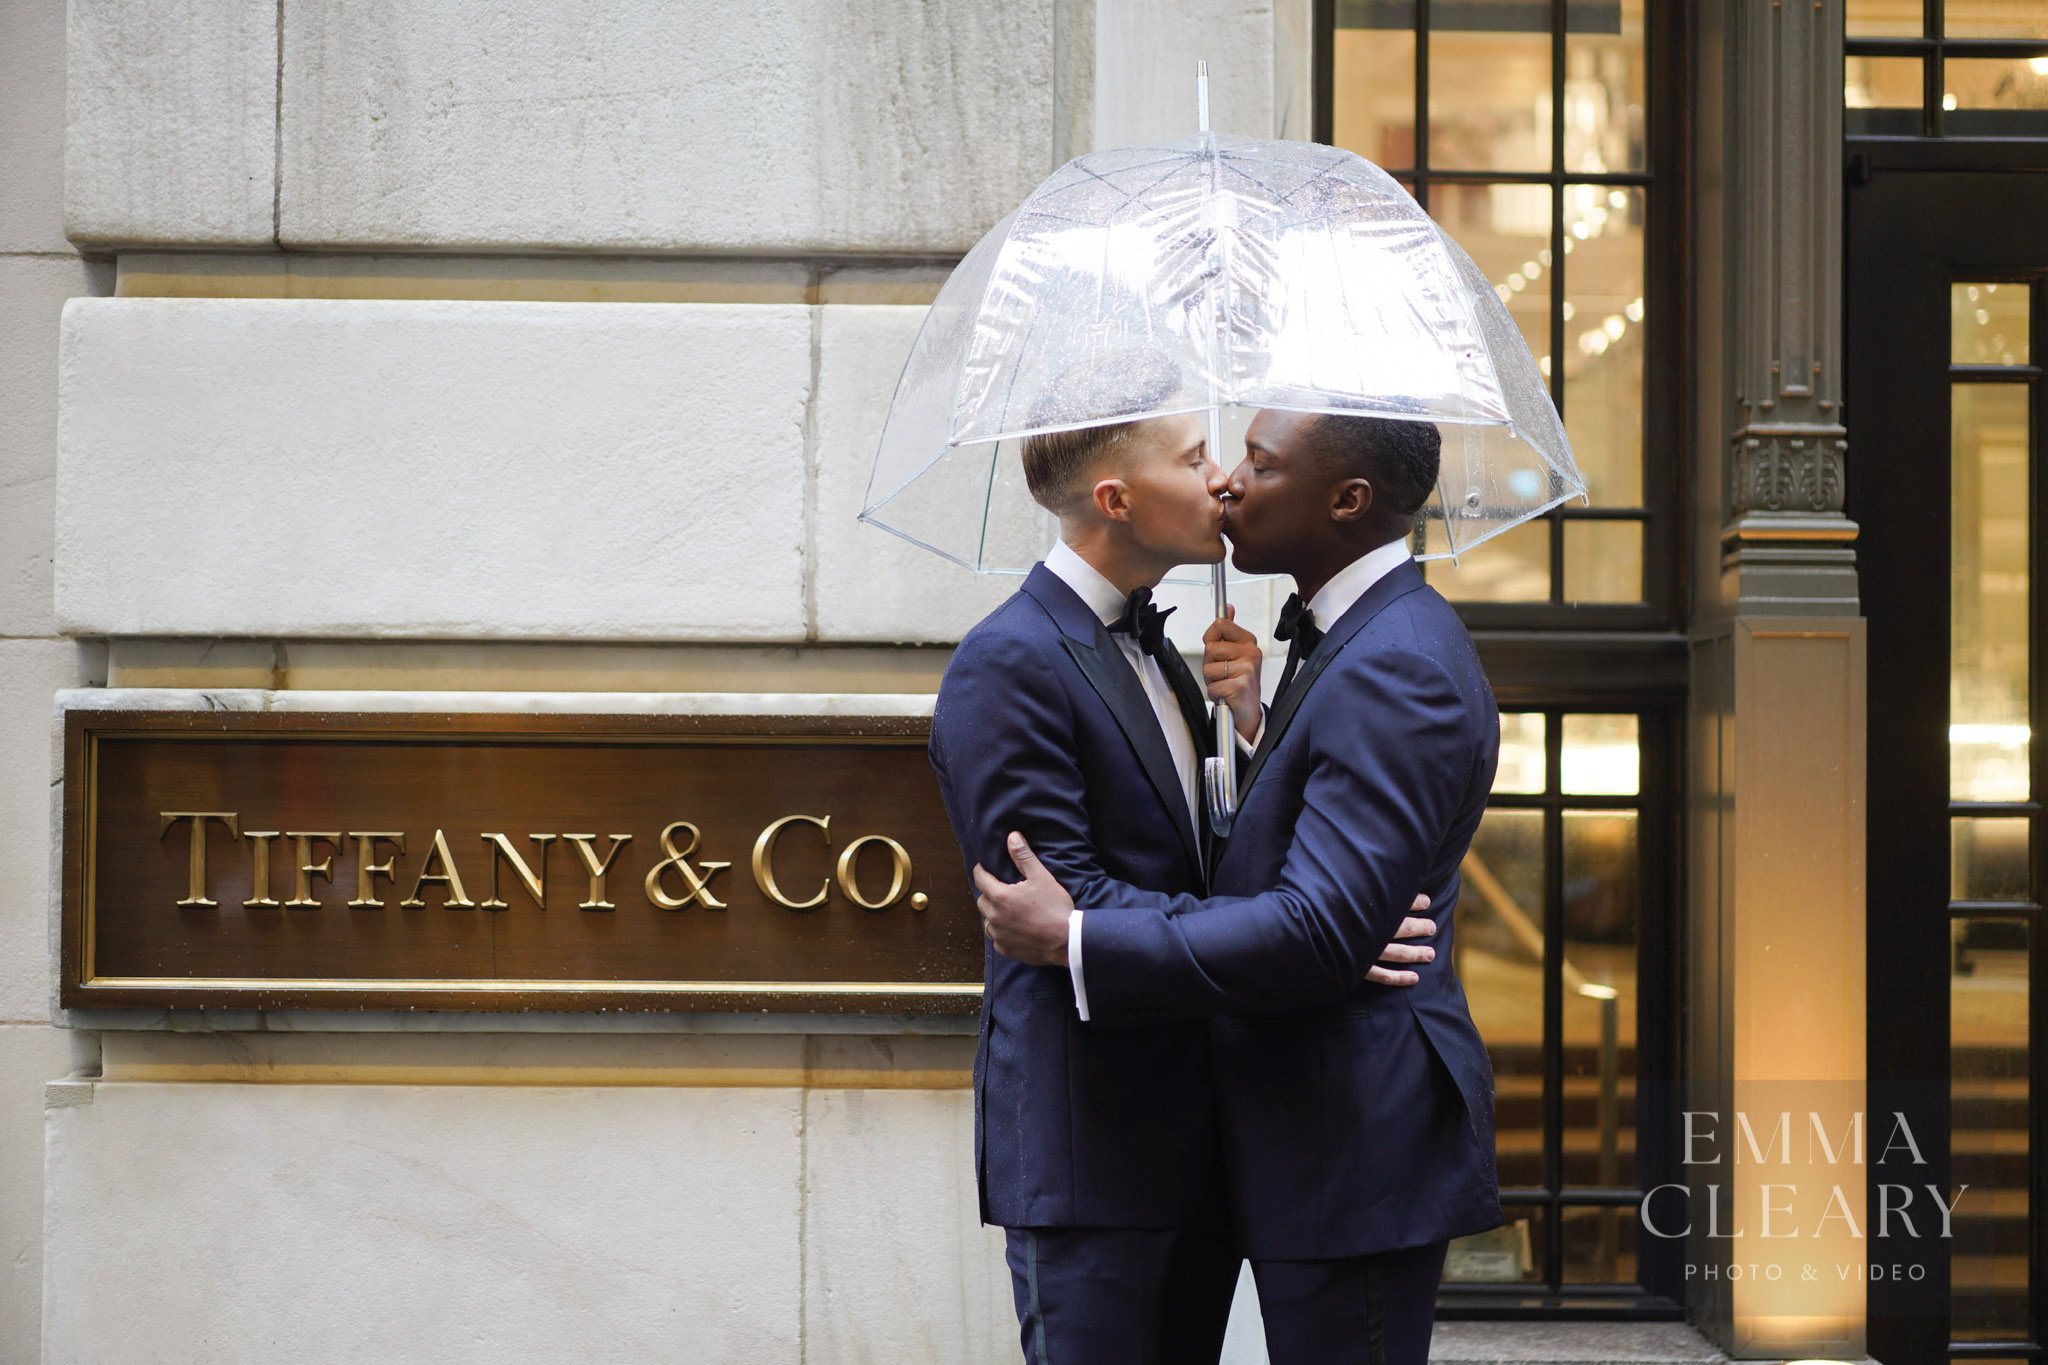 Wedding kiss under the umbrella near the Tiffany & Co. in Manhattan